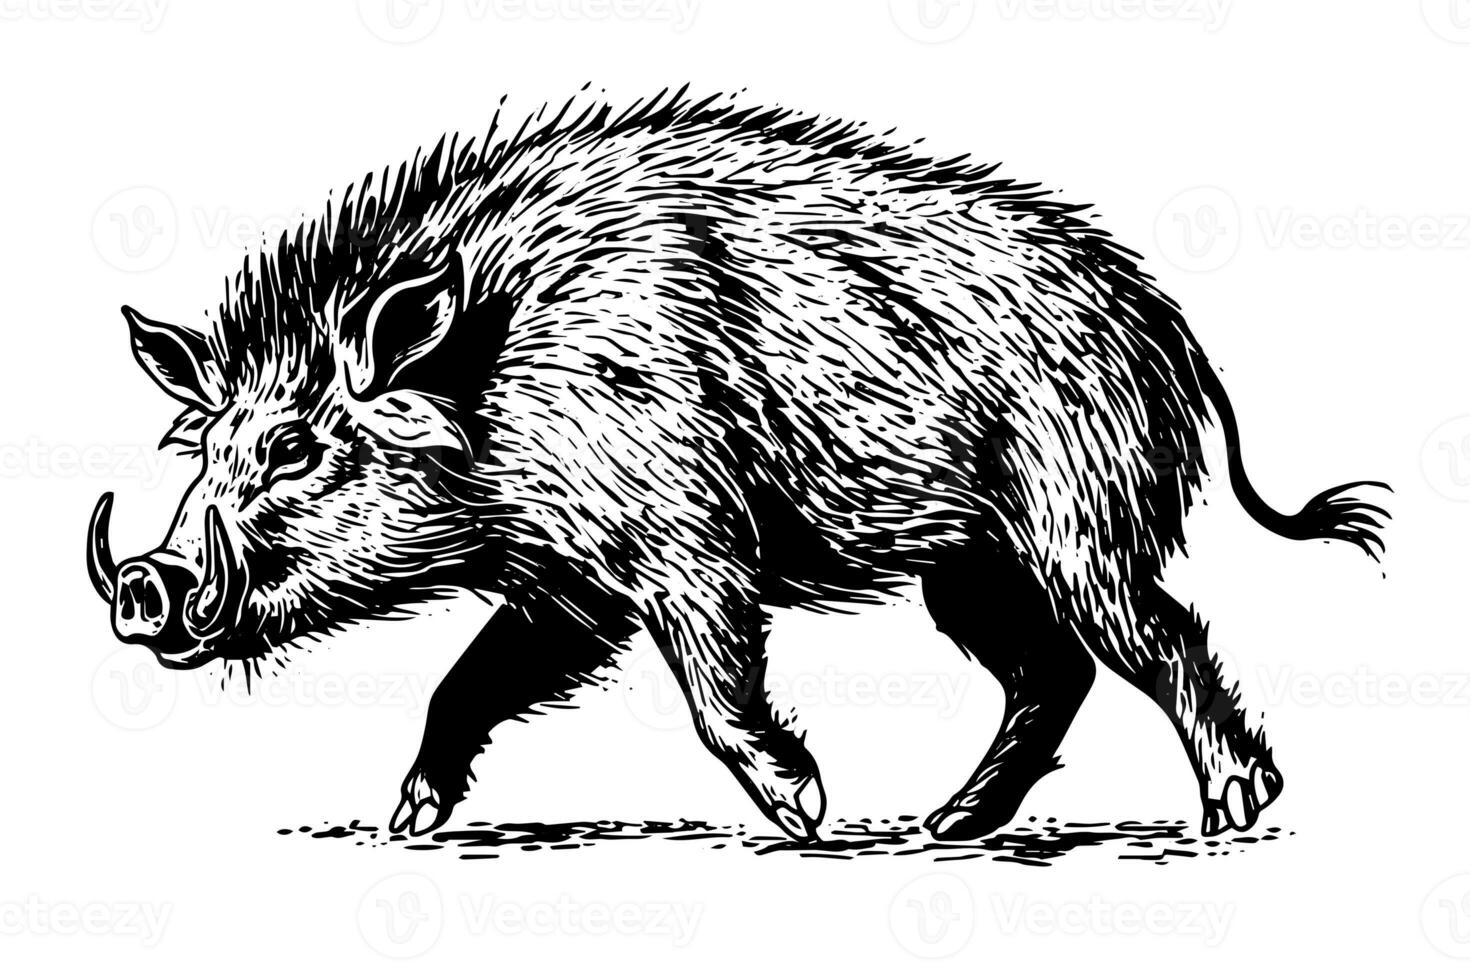 Boar or wild pig drawing ink sketch, vintage engraved style vector illustration. photo